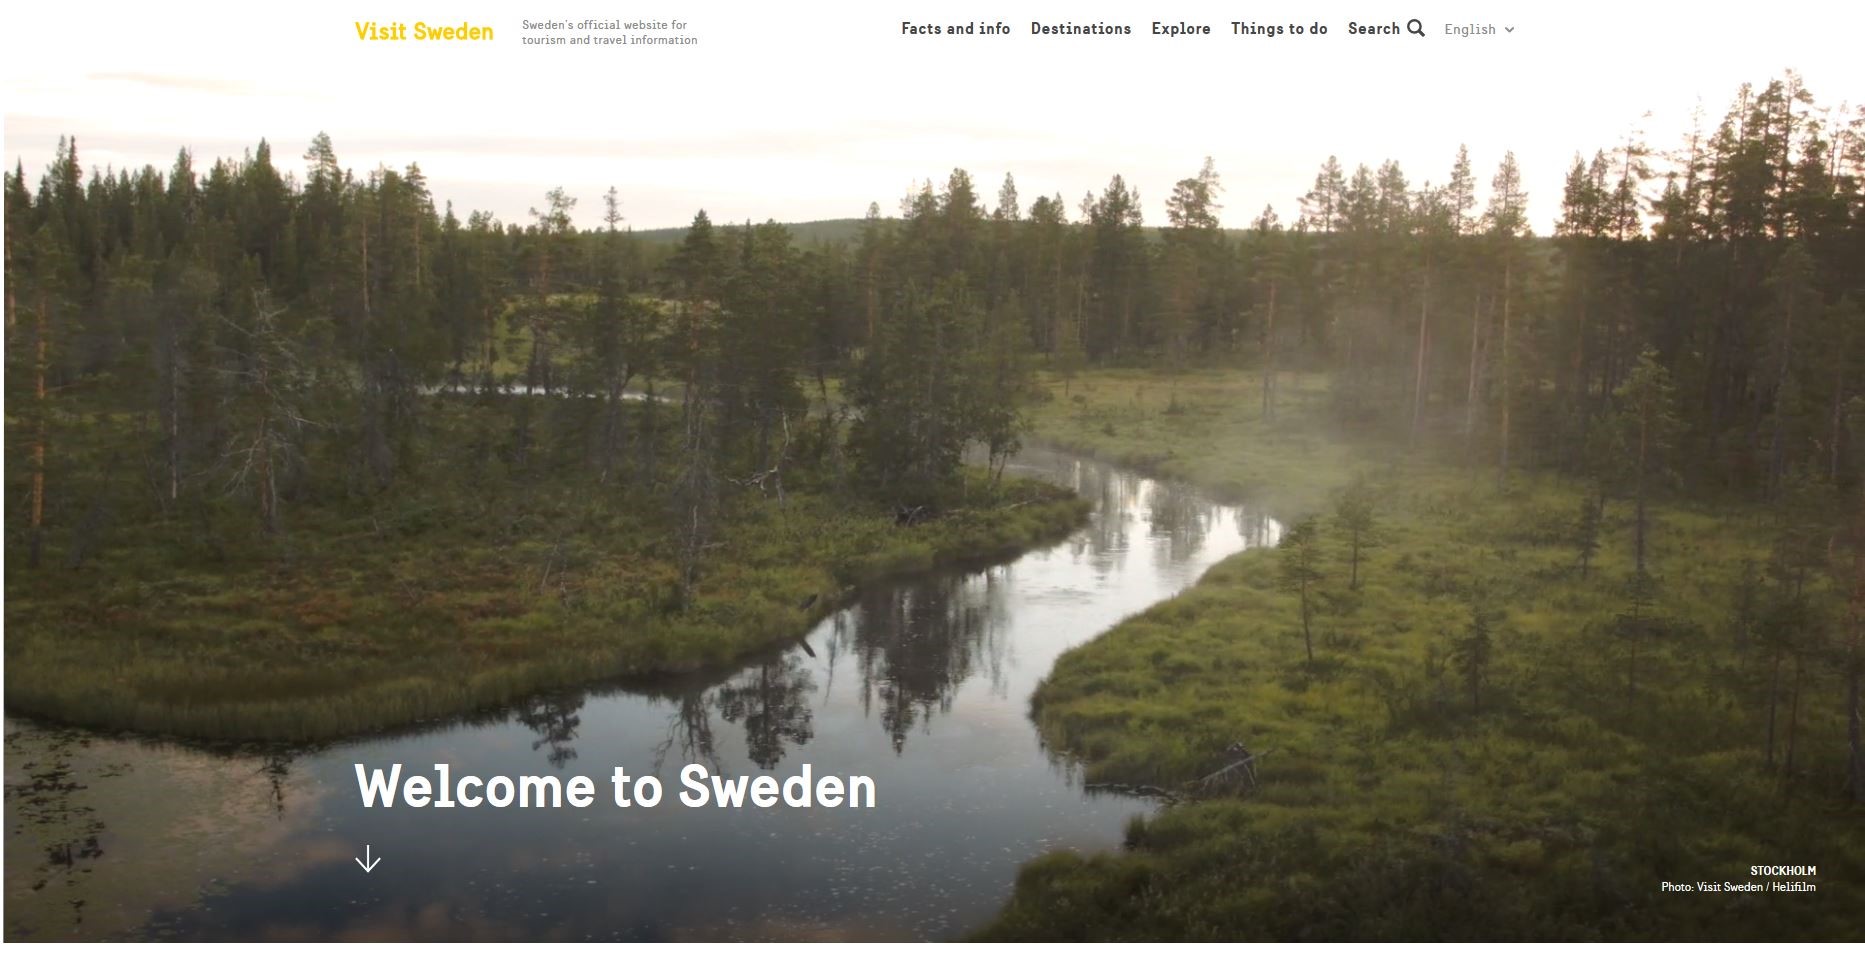 visitsweden’s website showing a minimalist style